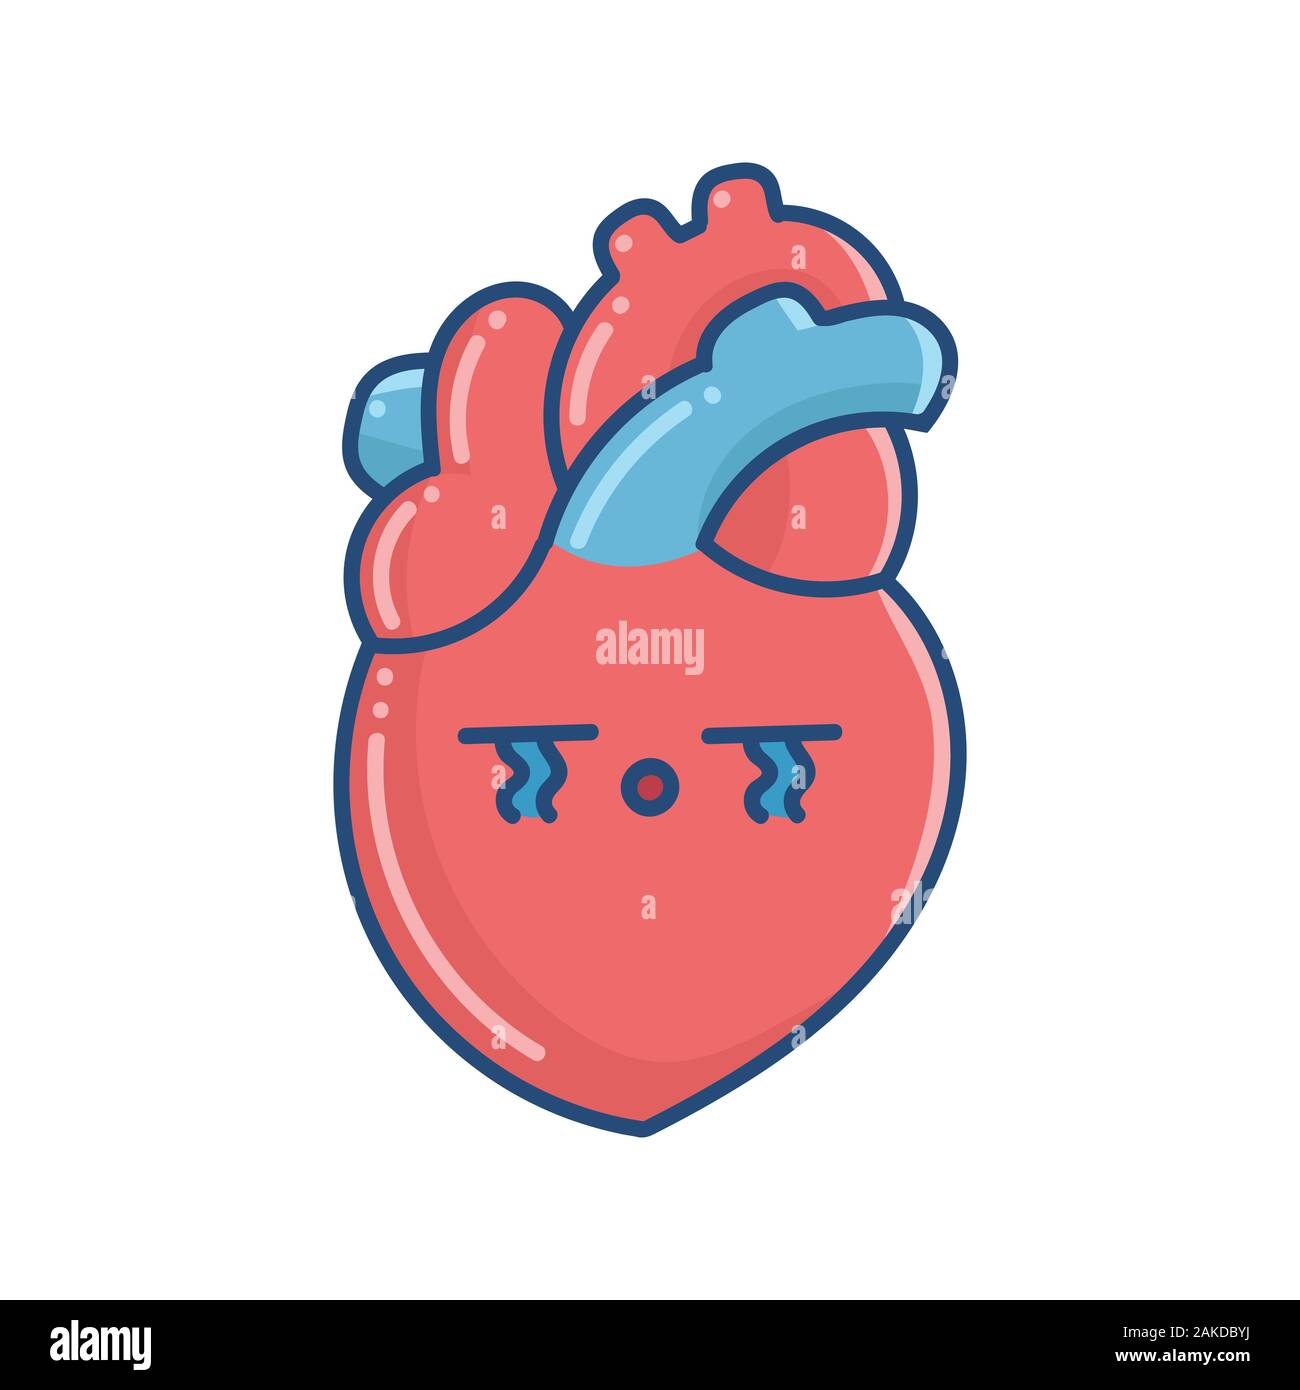 kawaii crying human heart illustration isolated on white Stock Vector